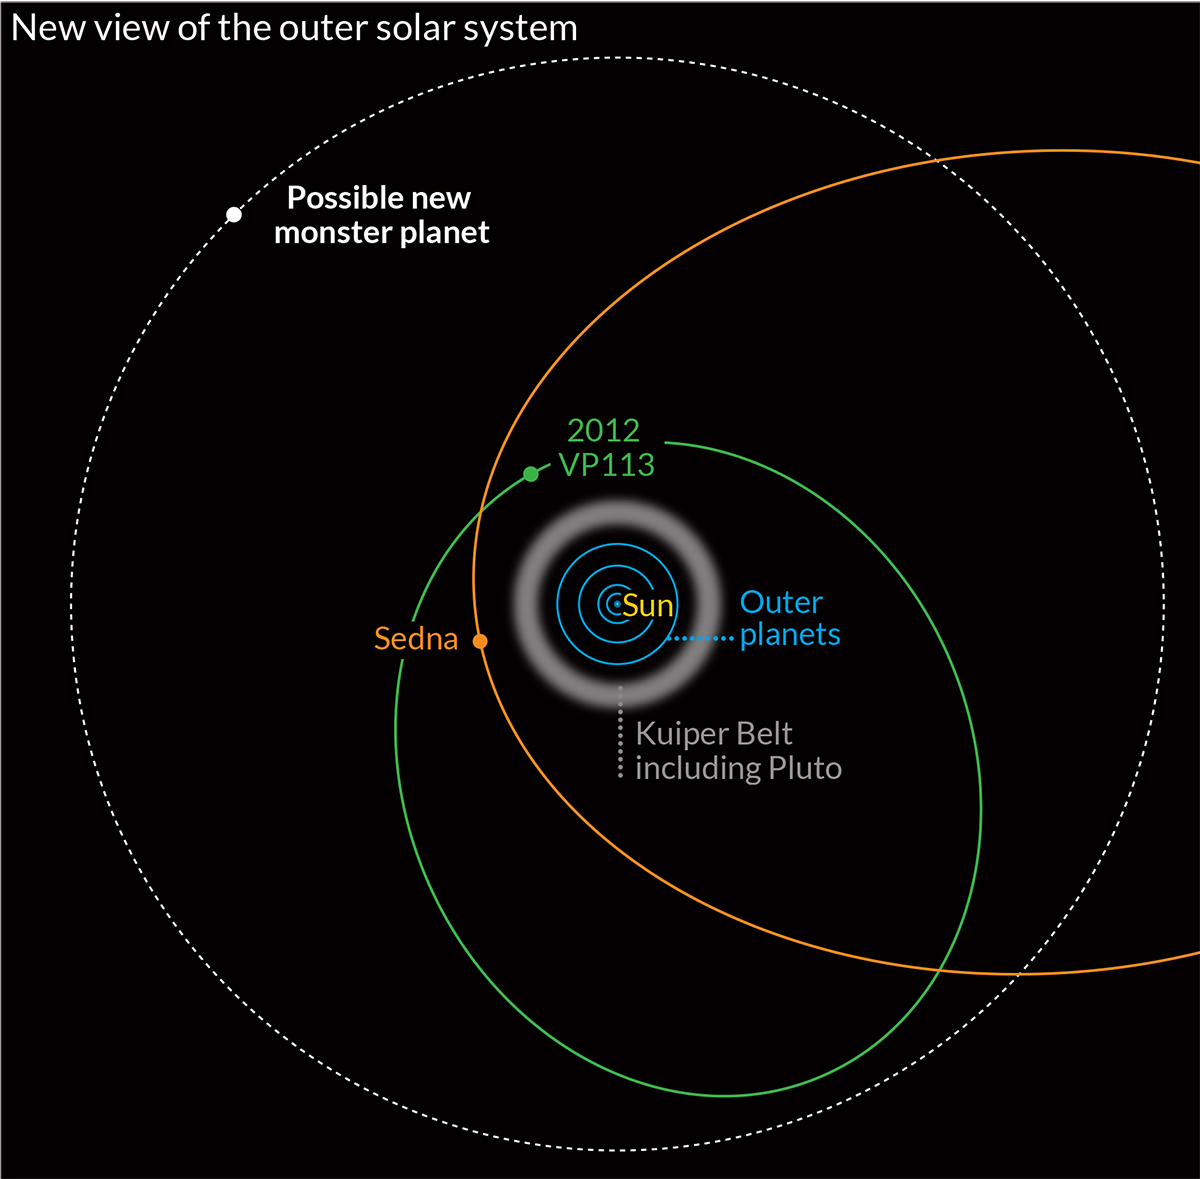 Orbit of possible new planet